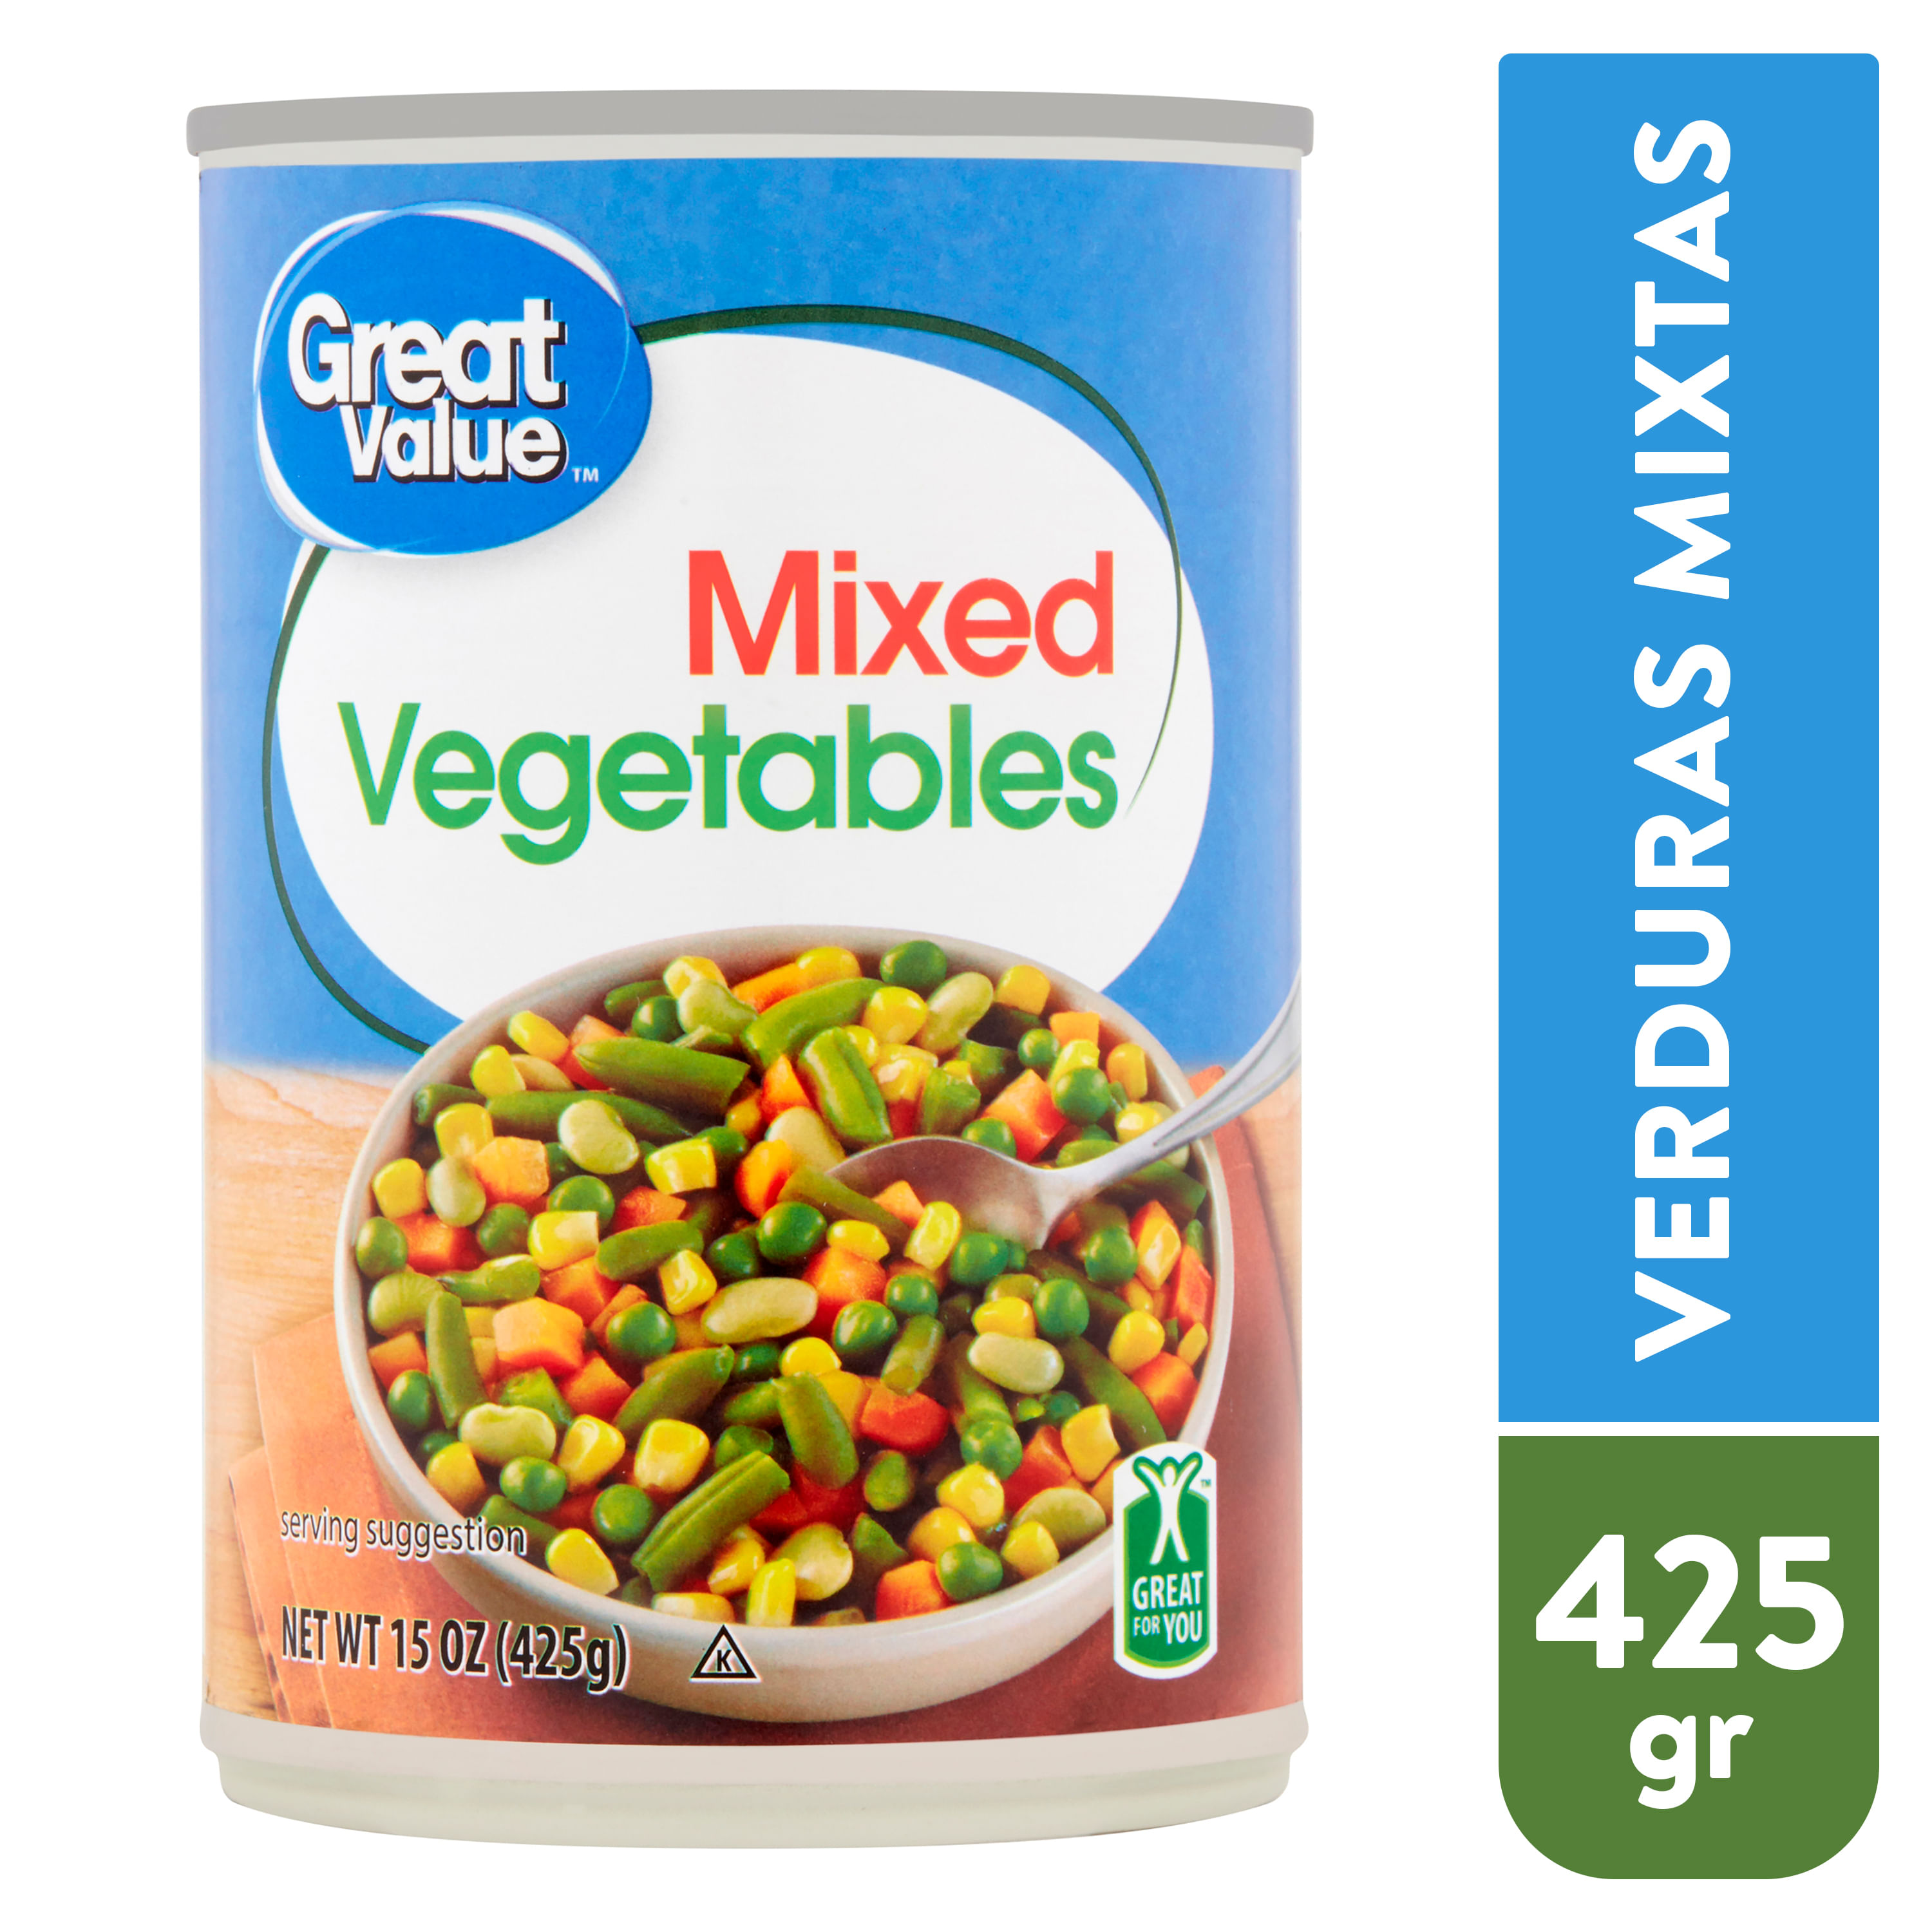 Vegetales-Great-Value-Mixtos-425gr-1-7475